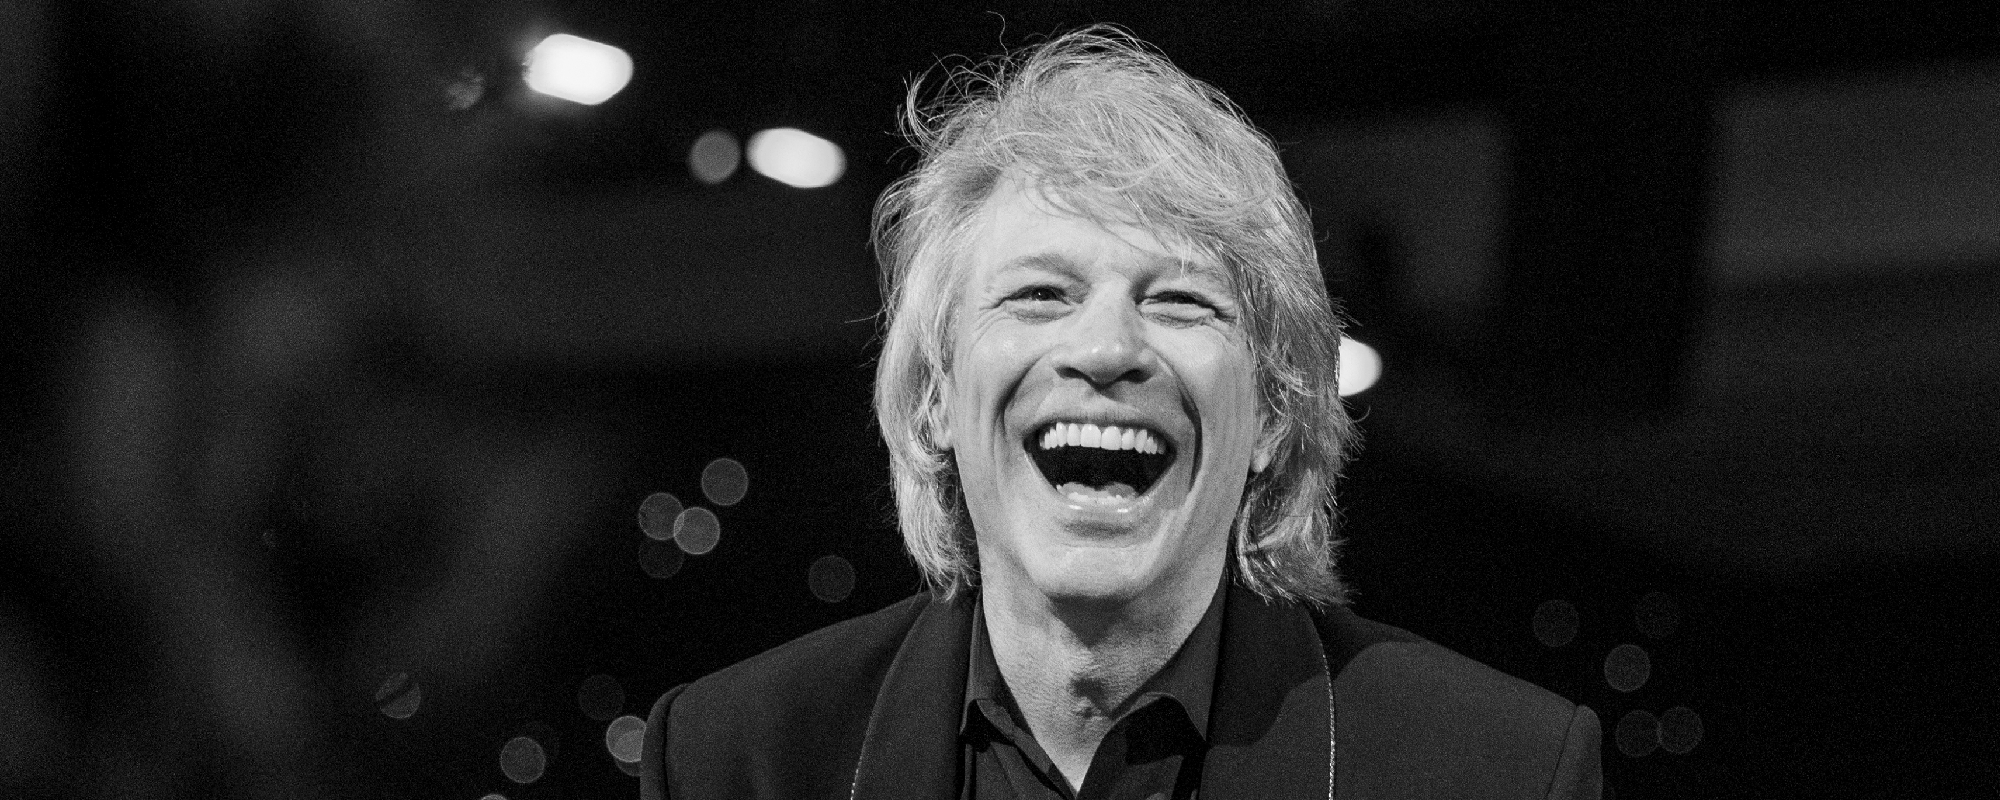 Jon Bon Jovi Discusses Friendship With Richie Sambora After He Left the Band